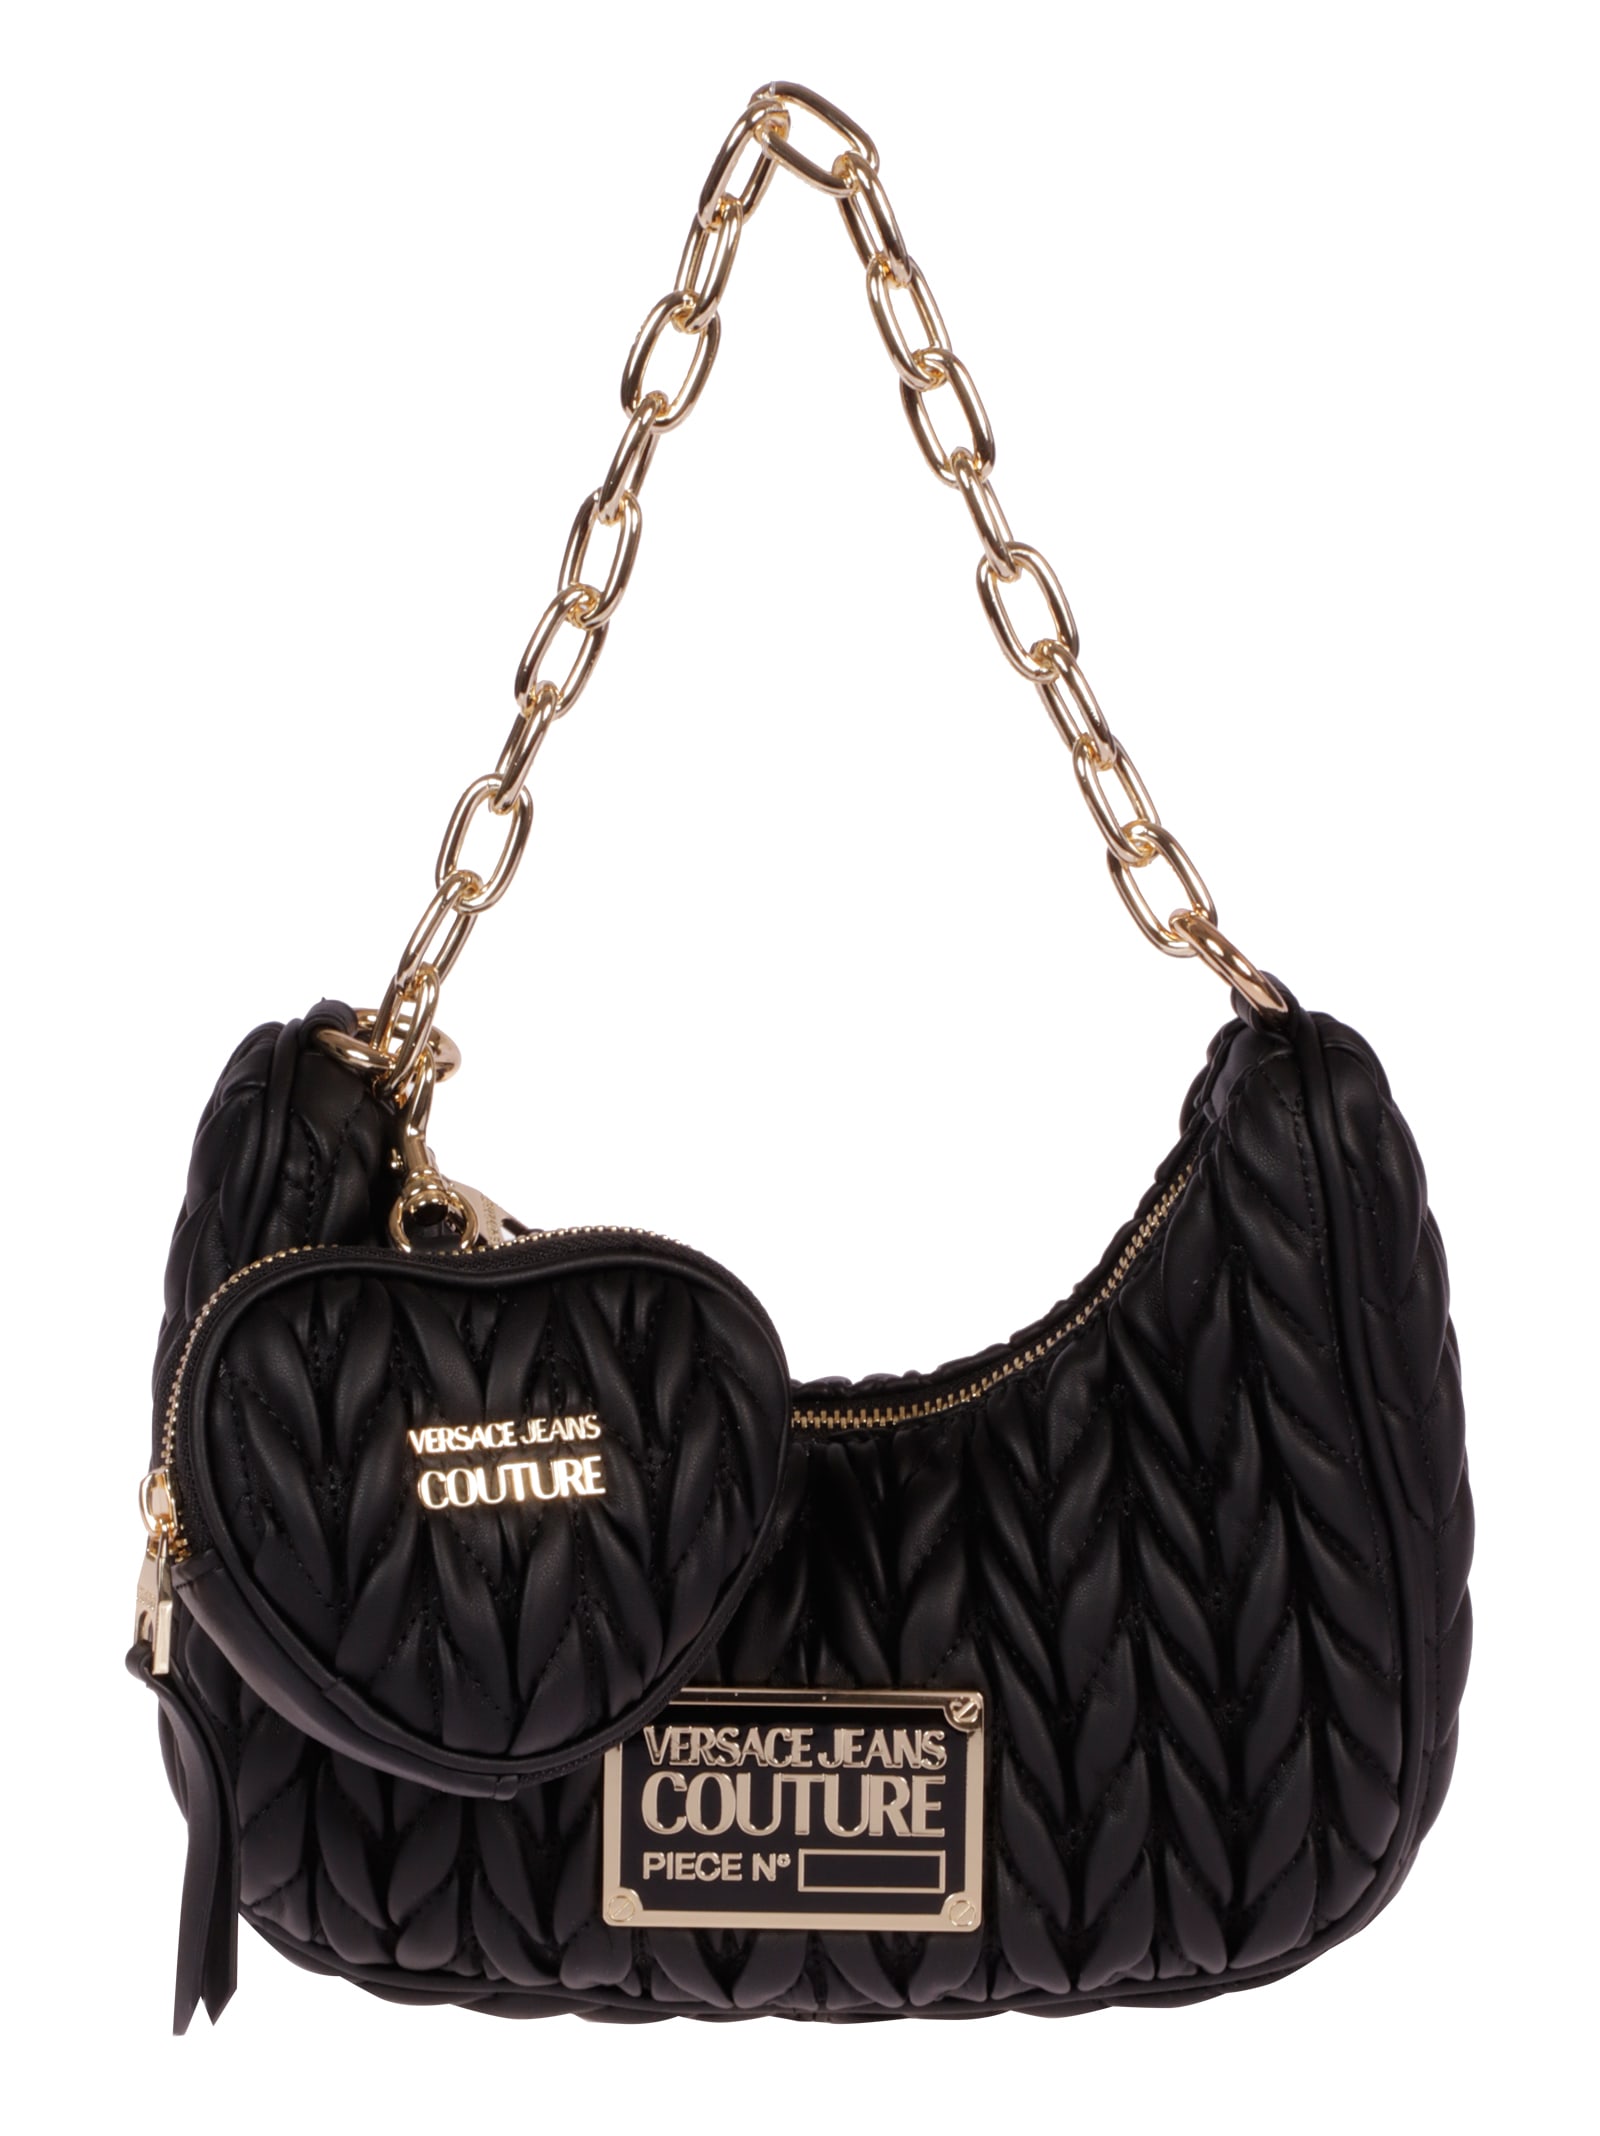 Versace Jeans Couture women Sketch couture handbags black